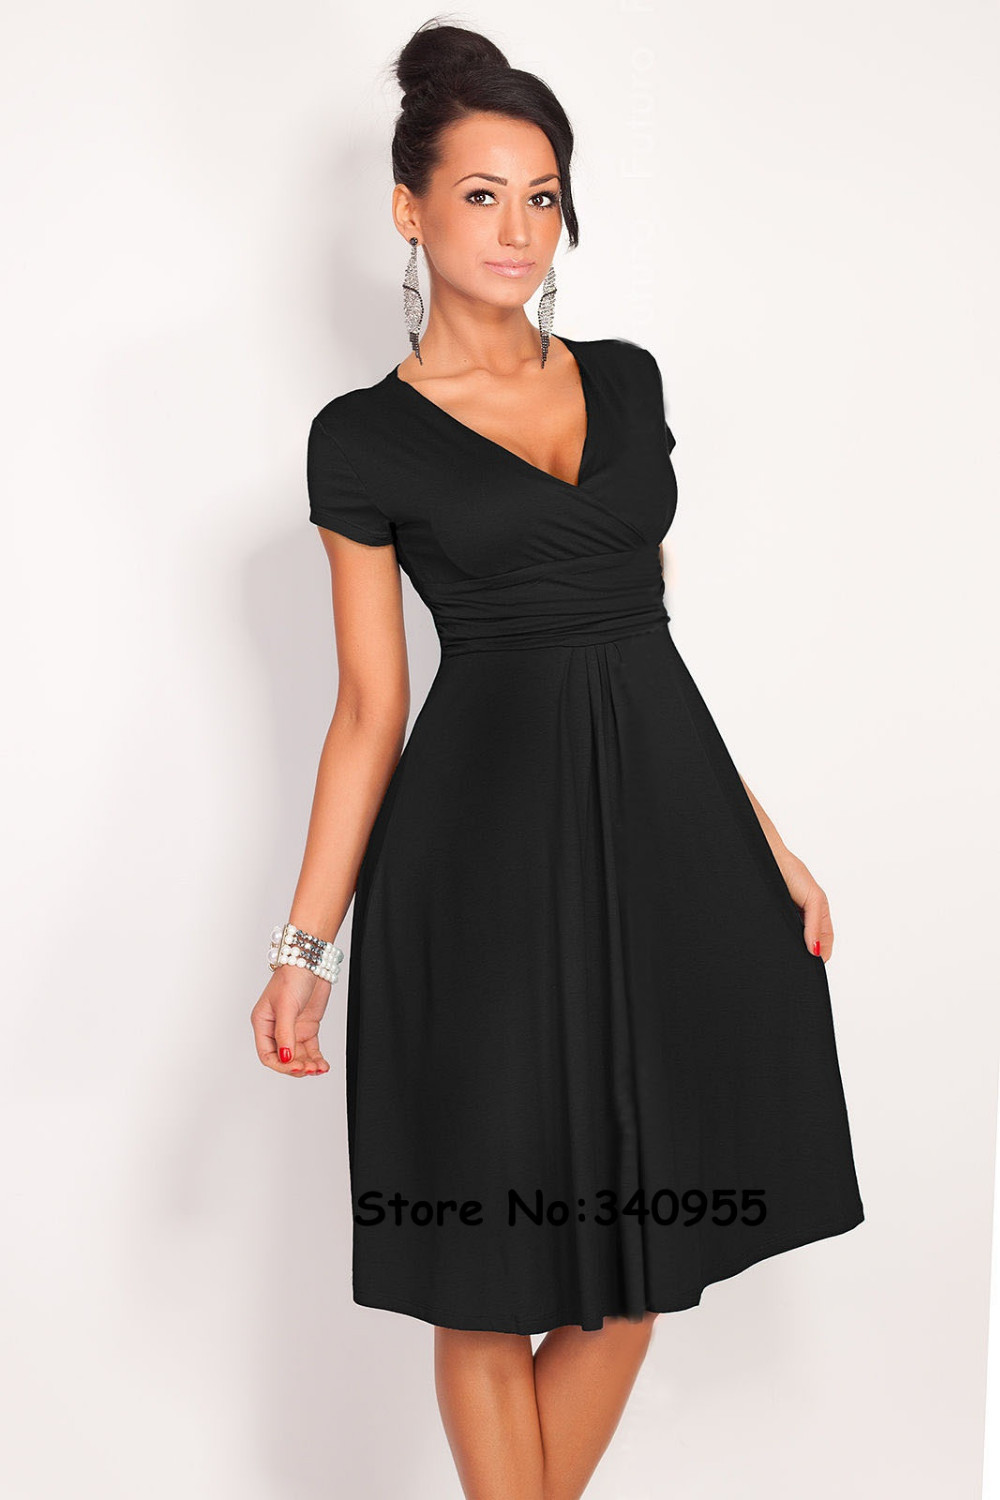 Women-Dresses-Summer-Casual-New-Fashion-Hot-Sale-V-neck-Short-Sleeve-Party-Dresses-Size-S-M-L-XL-XXL-2039256956